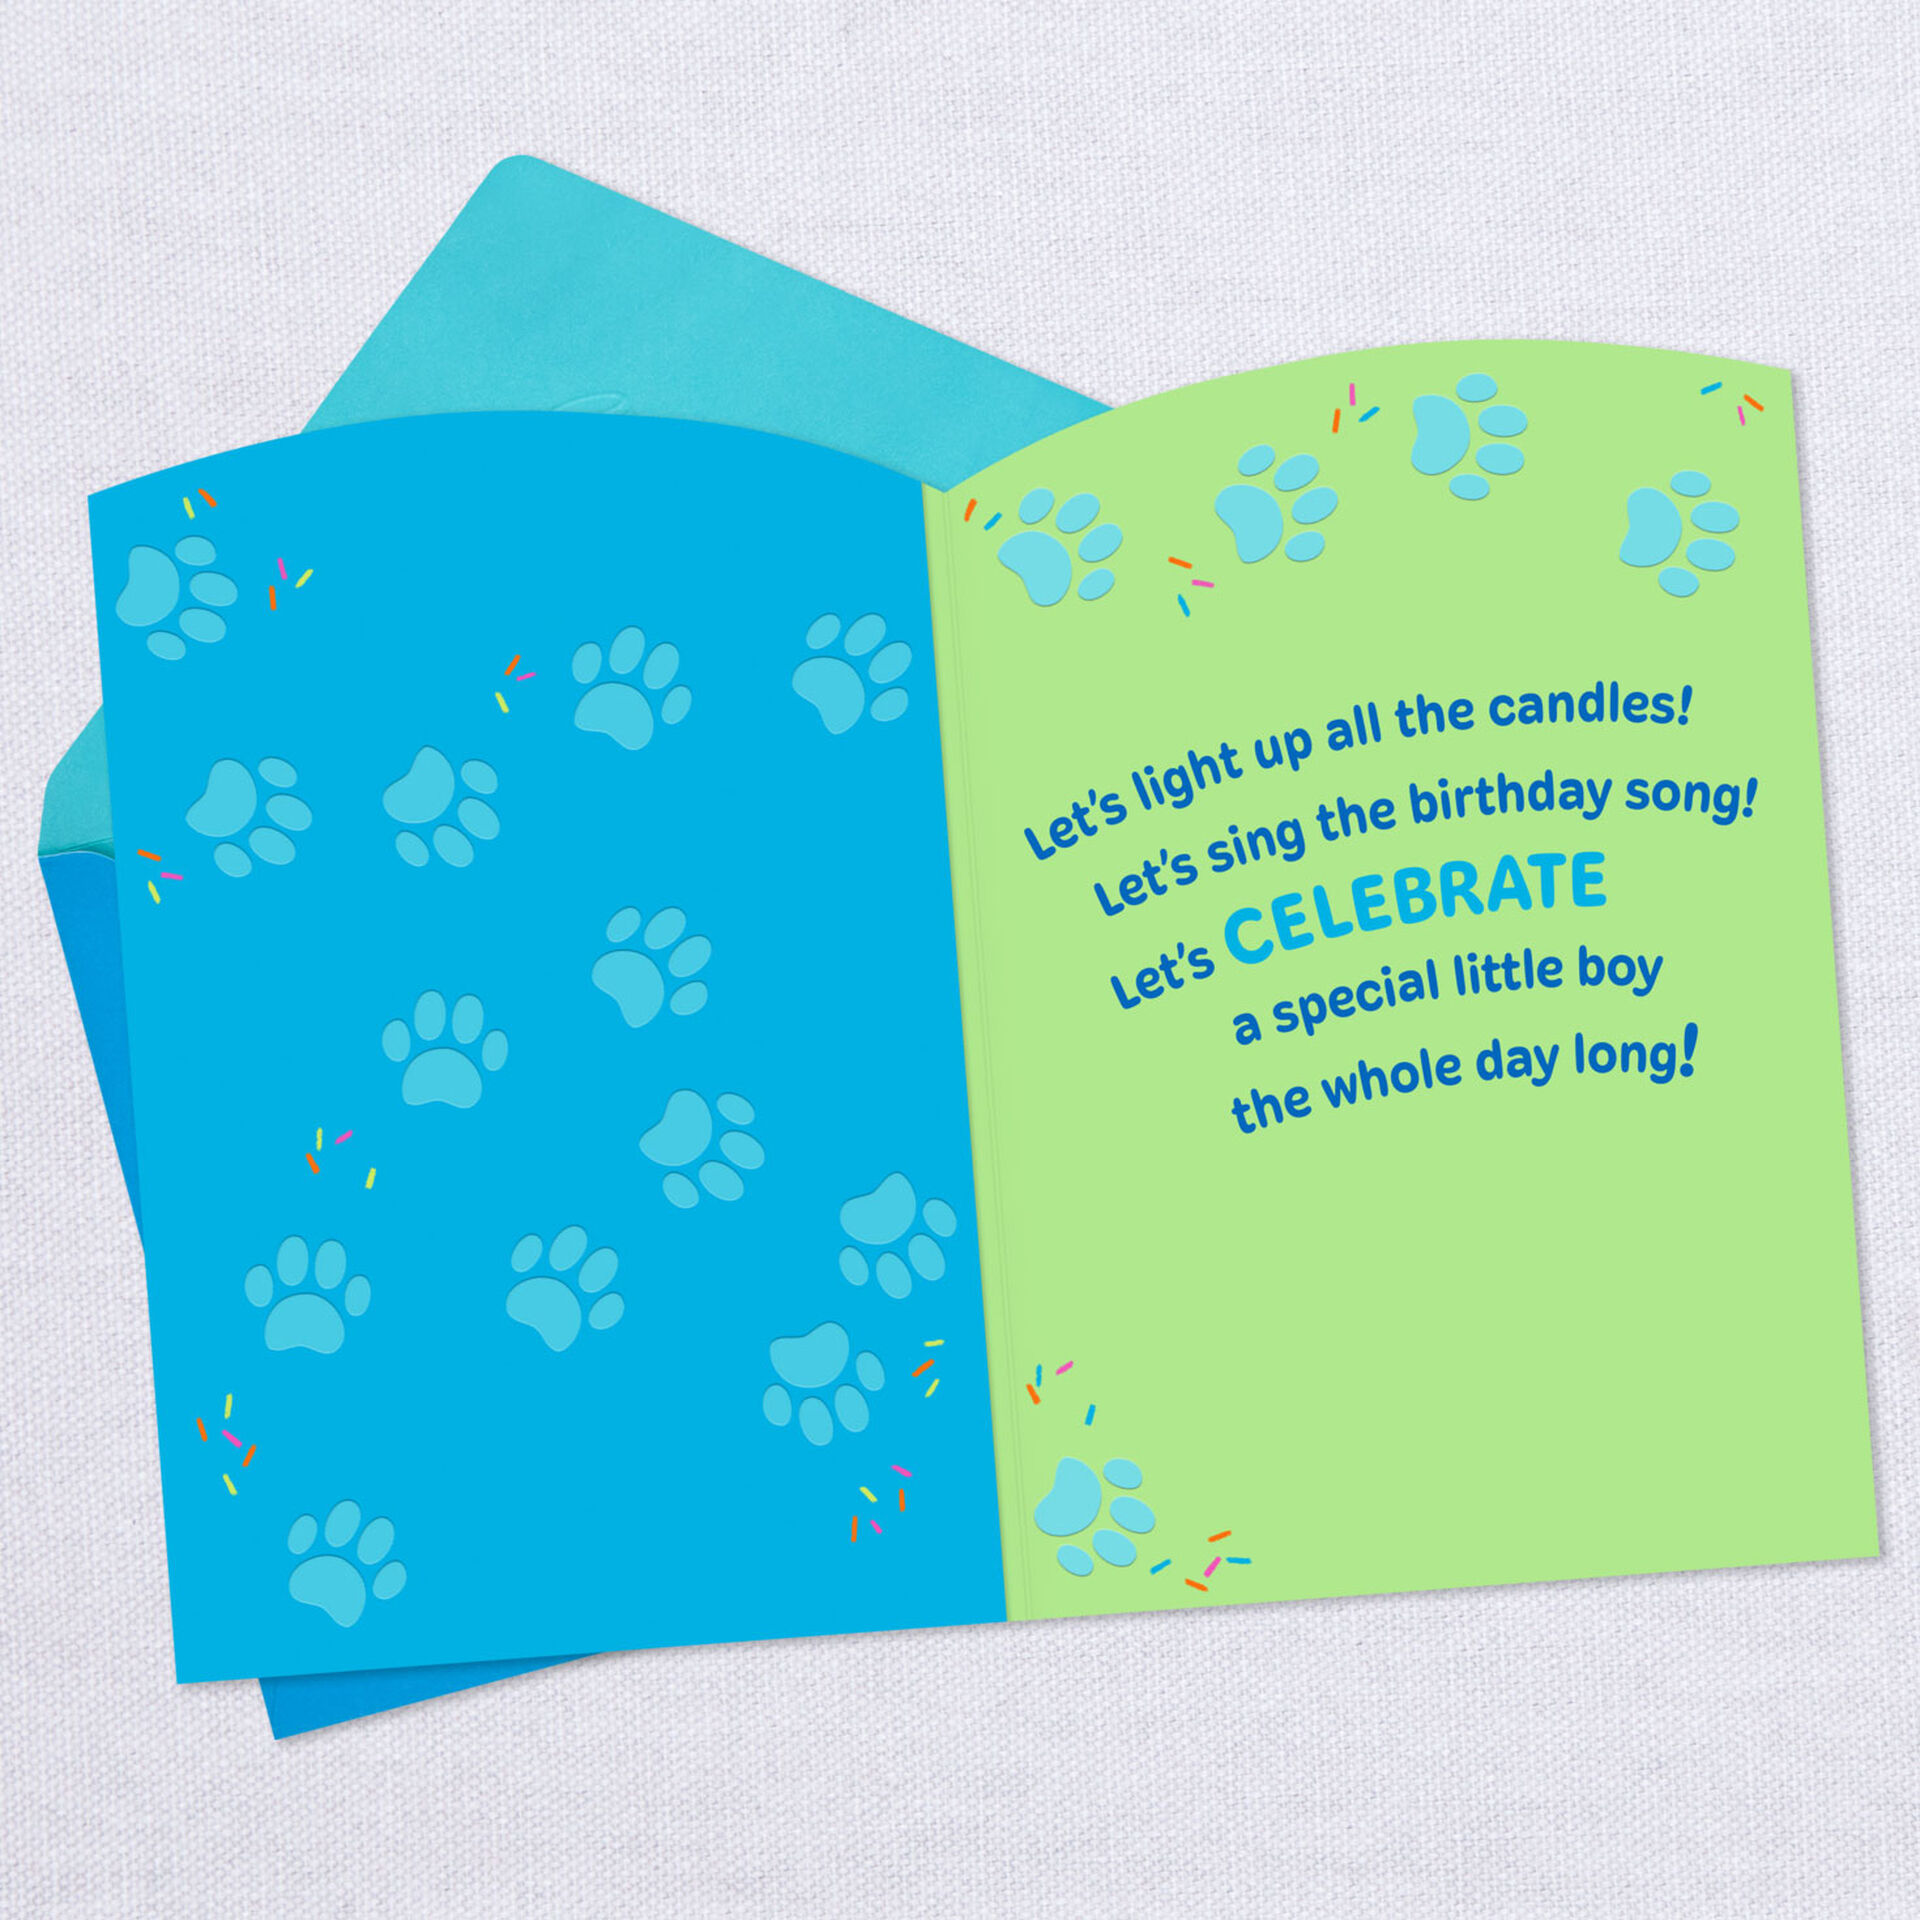 Dog-Eating-Cake-Kids-First-Birthday-Card-for-Boy_299HKB5949_03